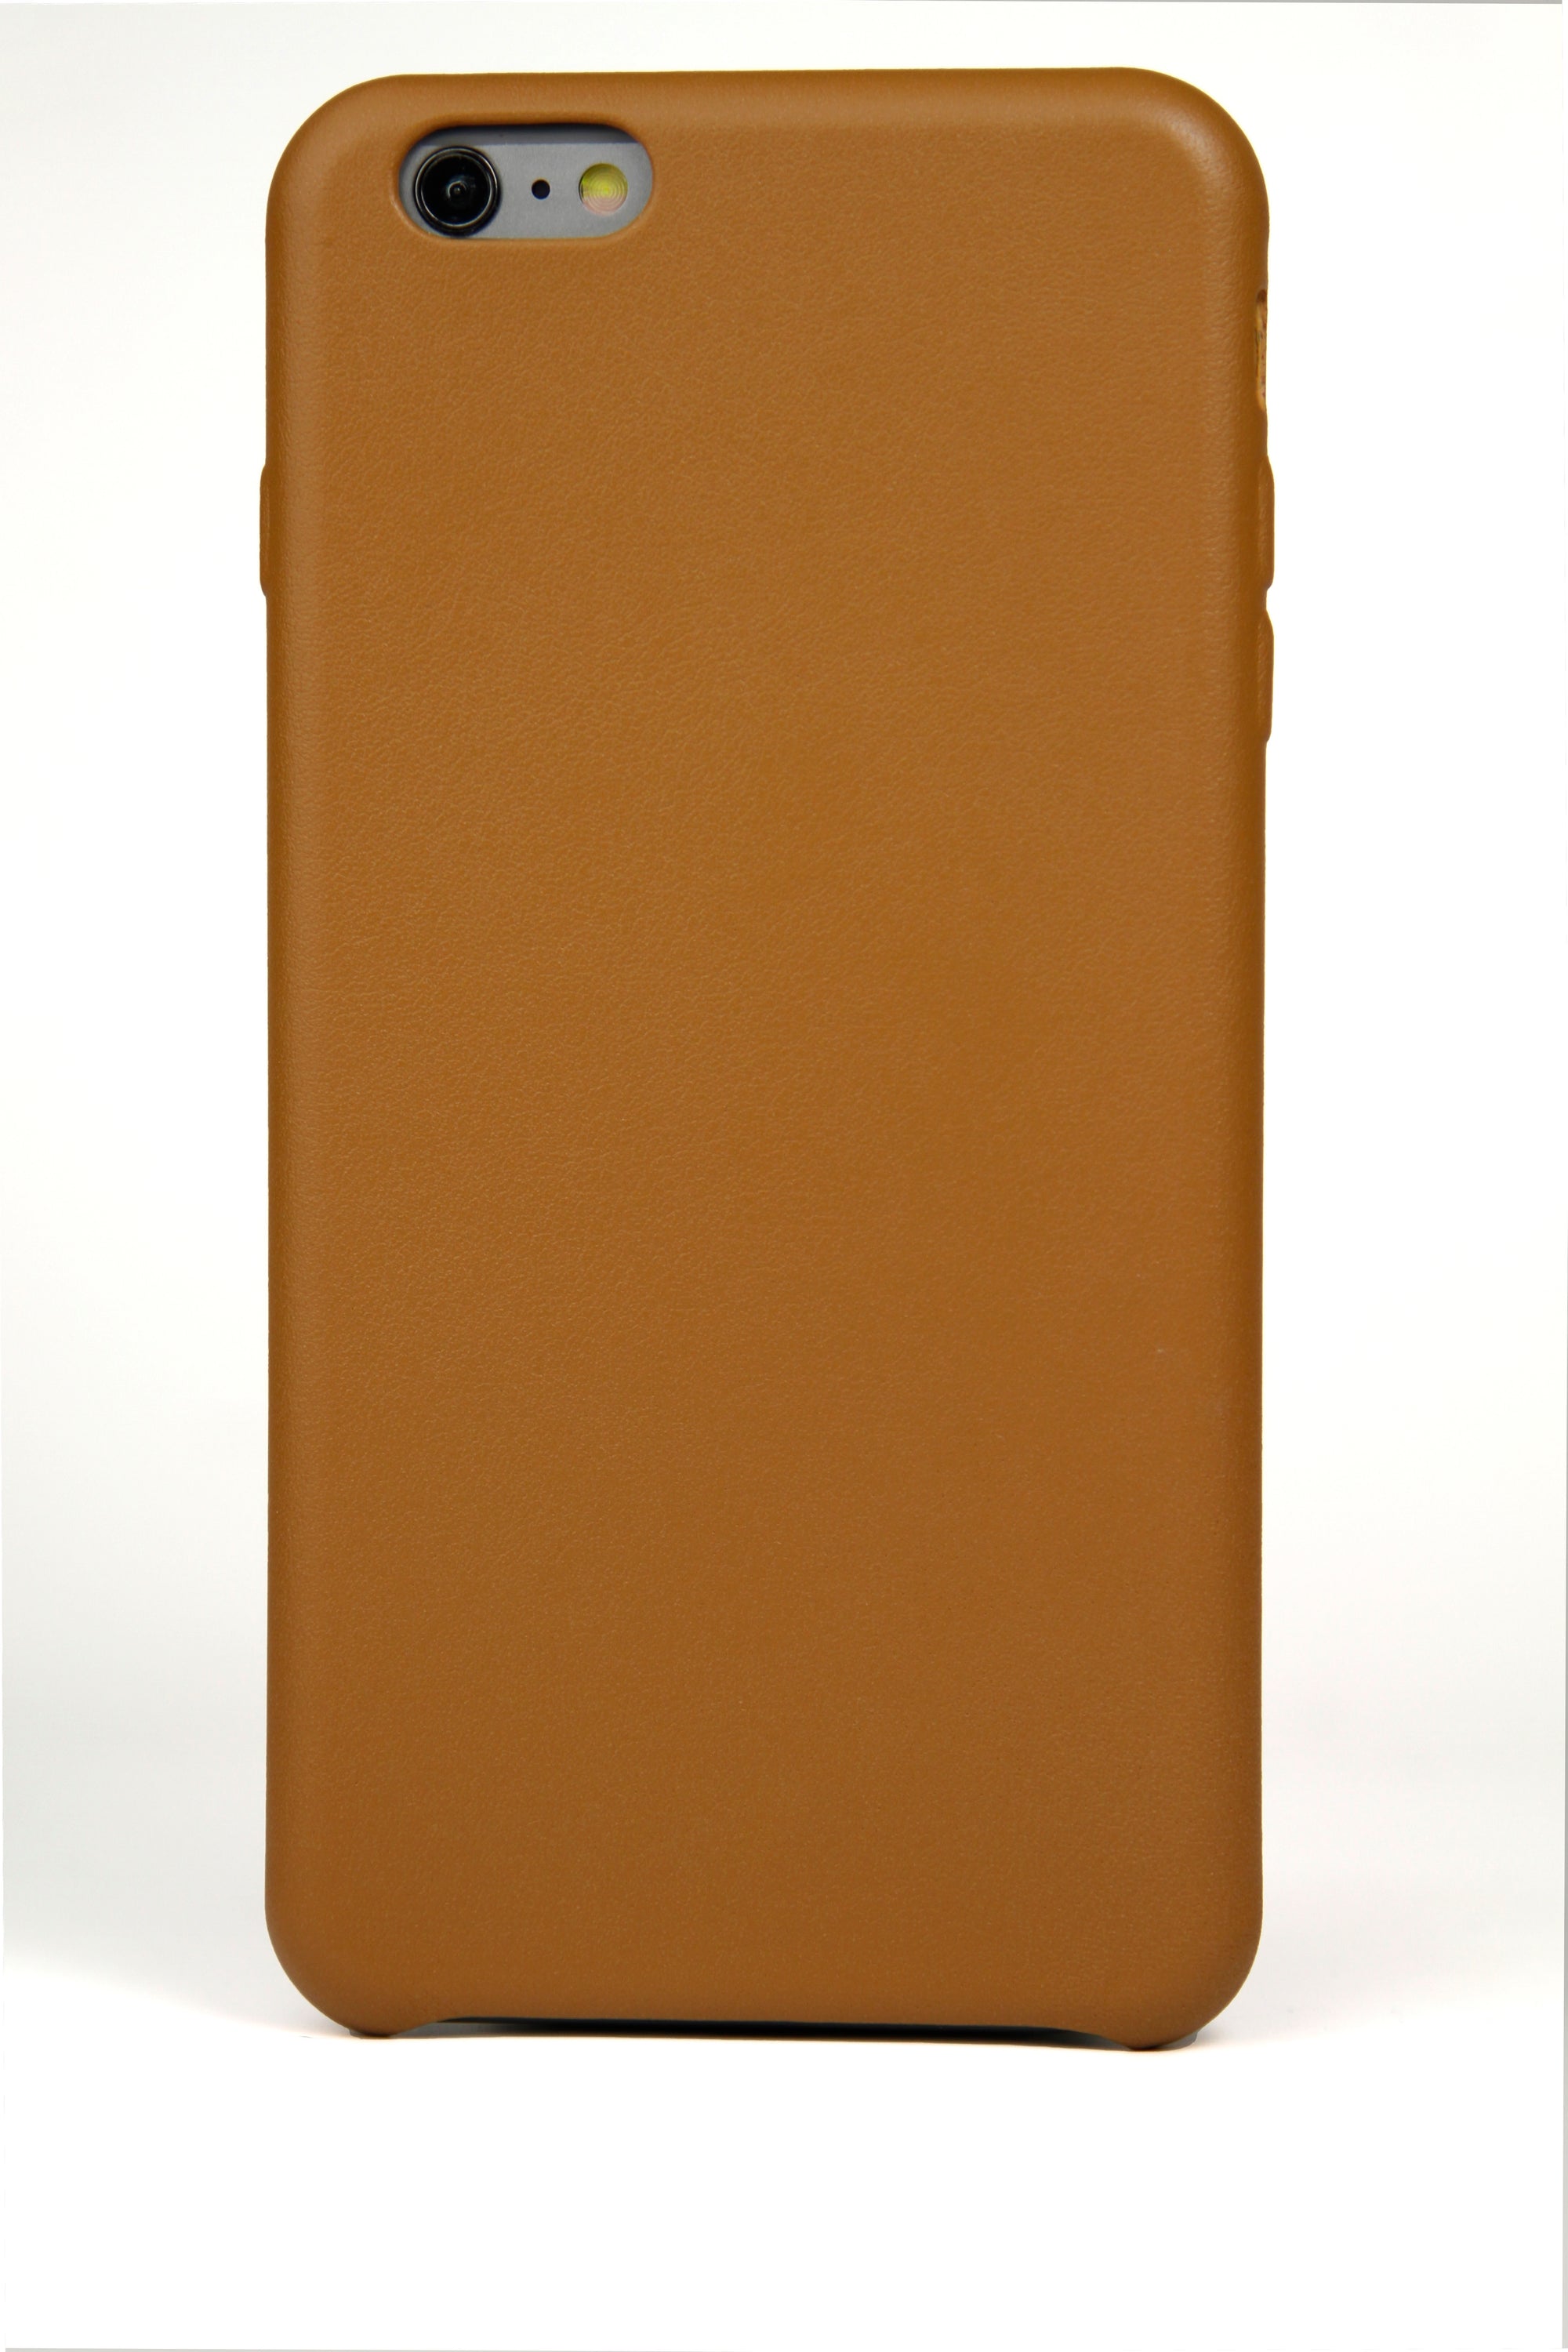 iPhone 6 Plus Case, Tan Leather